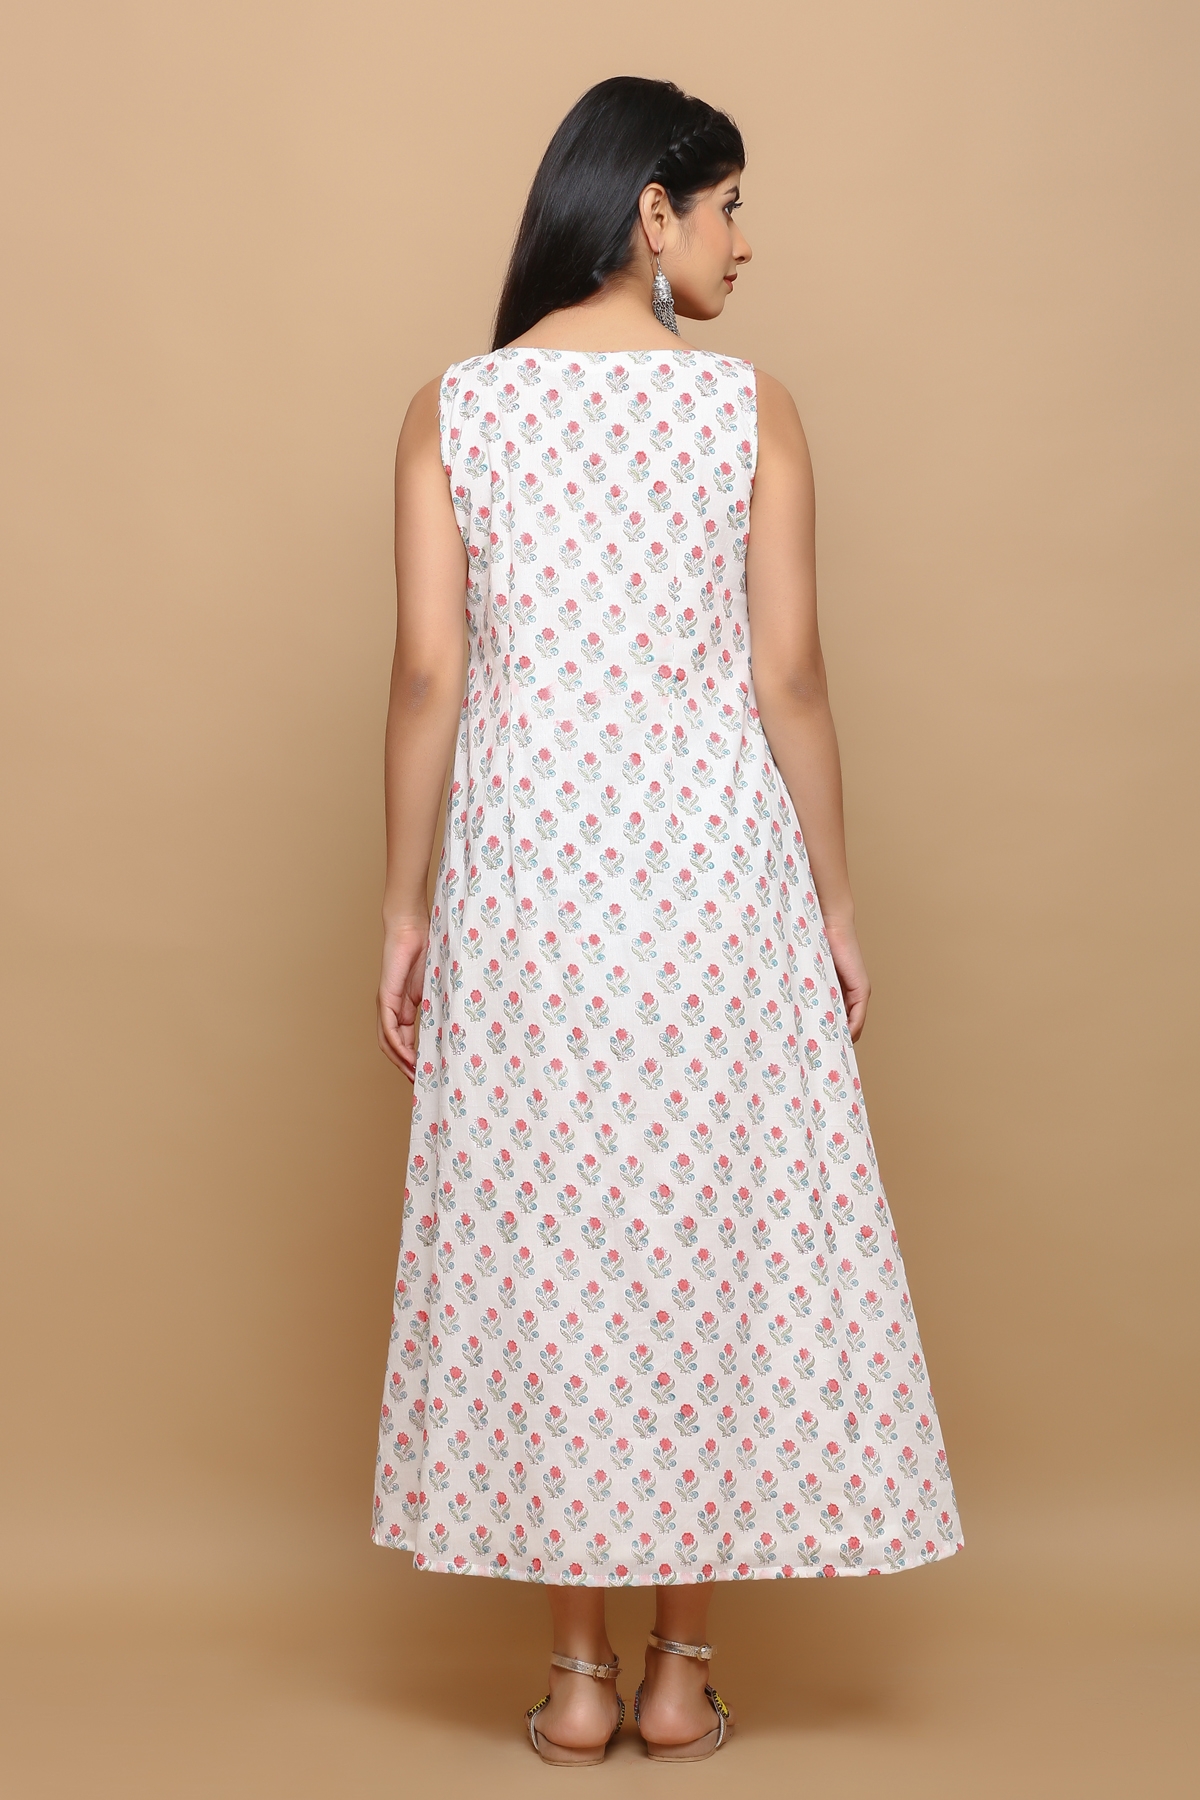 White buti printed dress with fish jaal kali